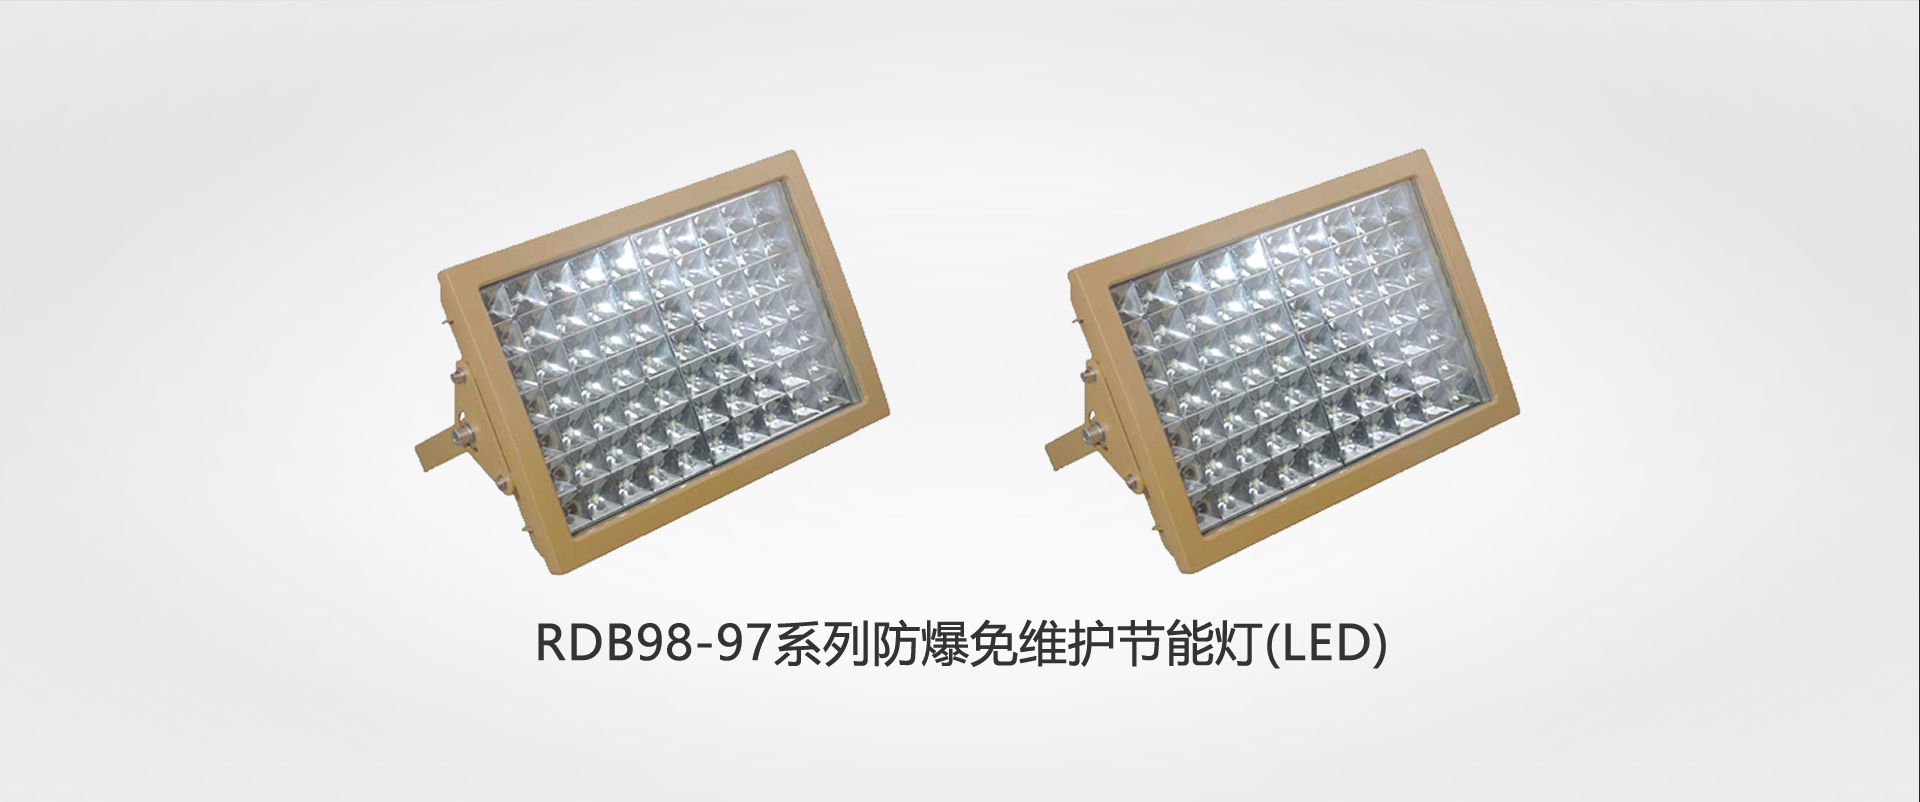 RDB98-97系列千亿体育球友会免维护节能灯(LED)